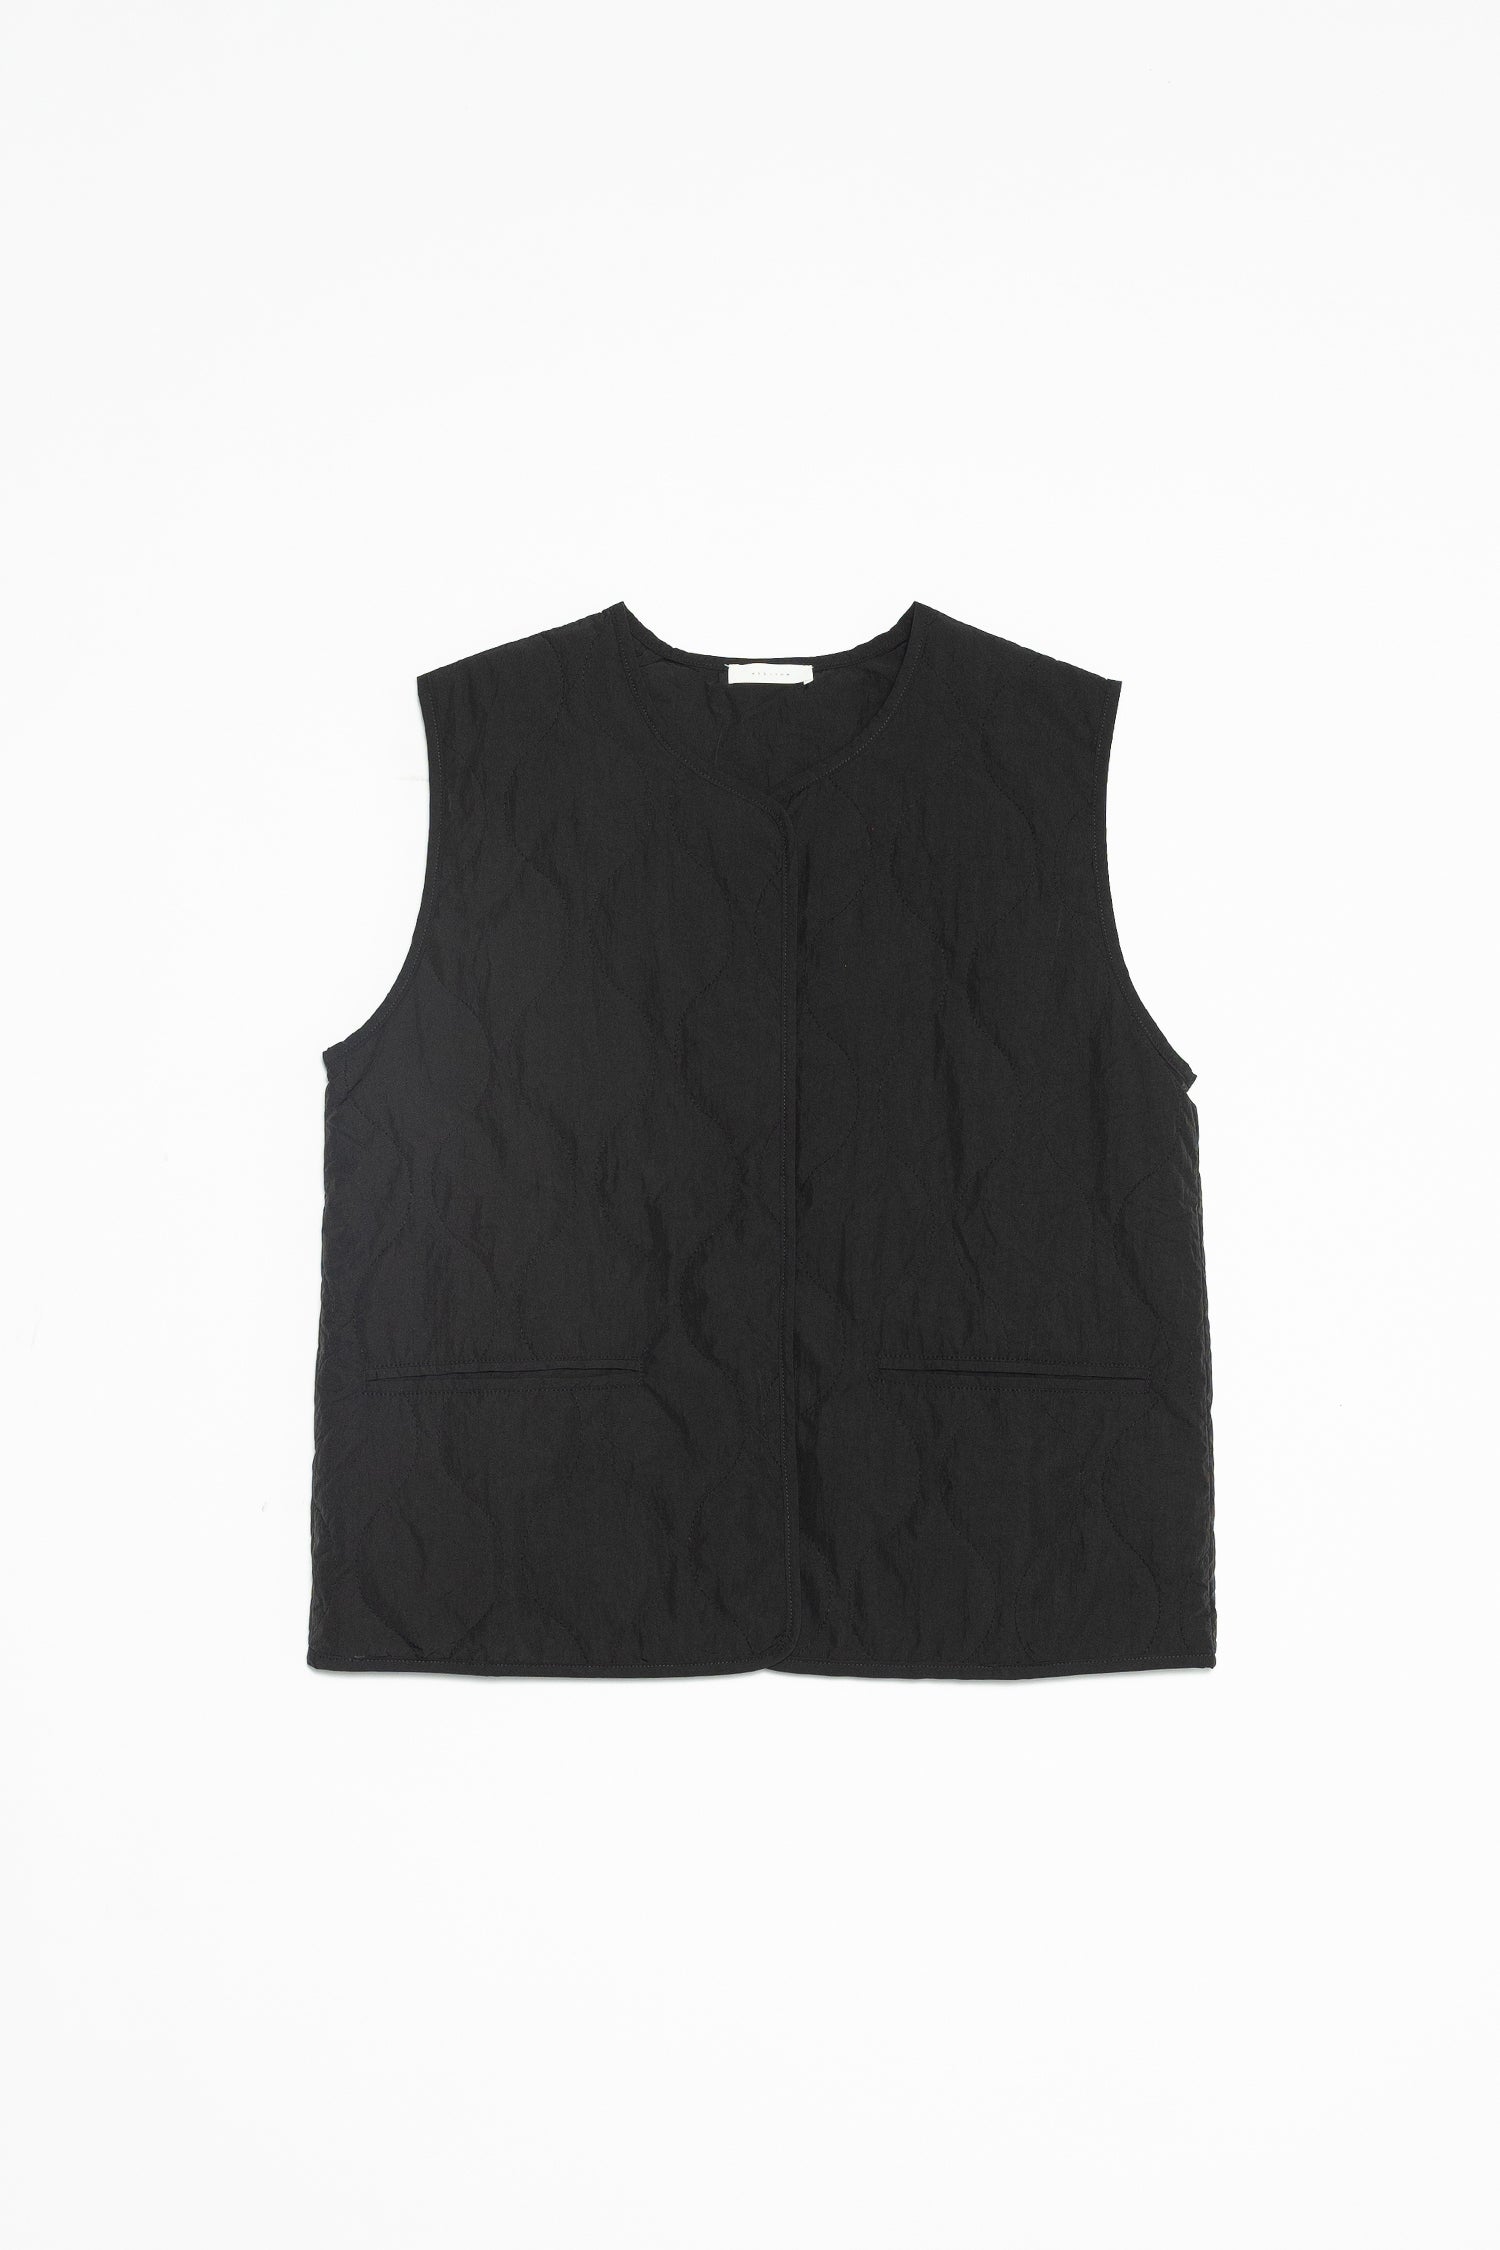 Campbell & Associates Fleece Vest (RY421) - RycoSports